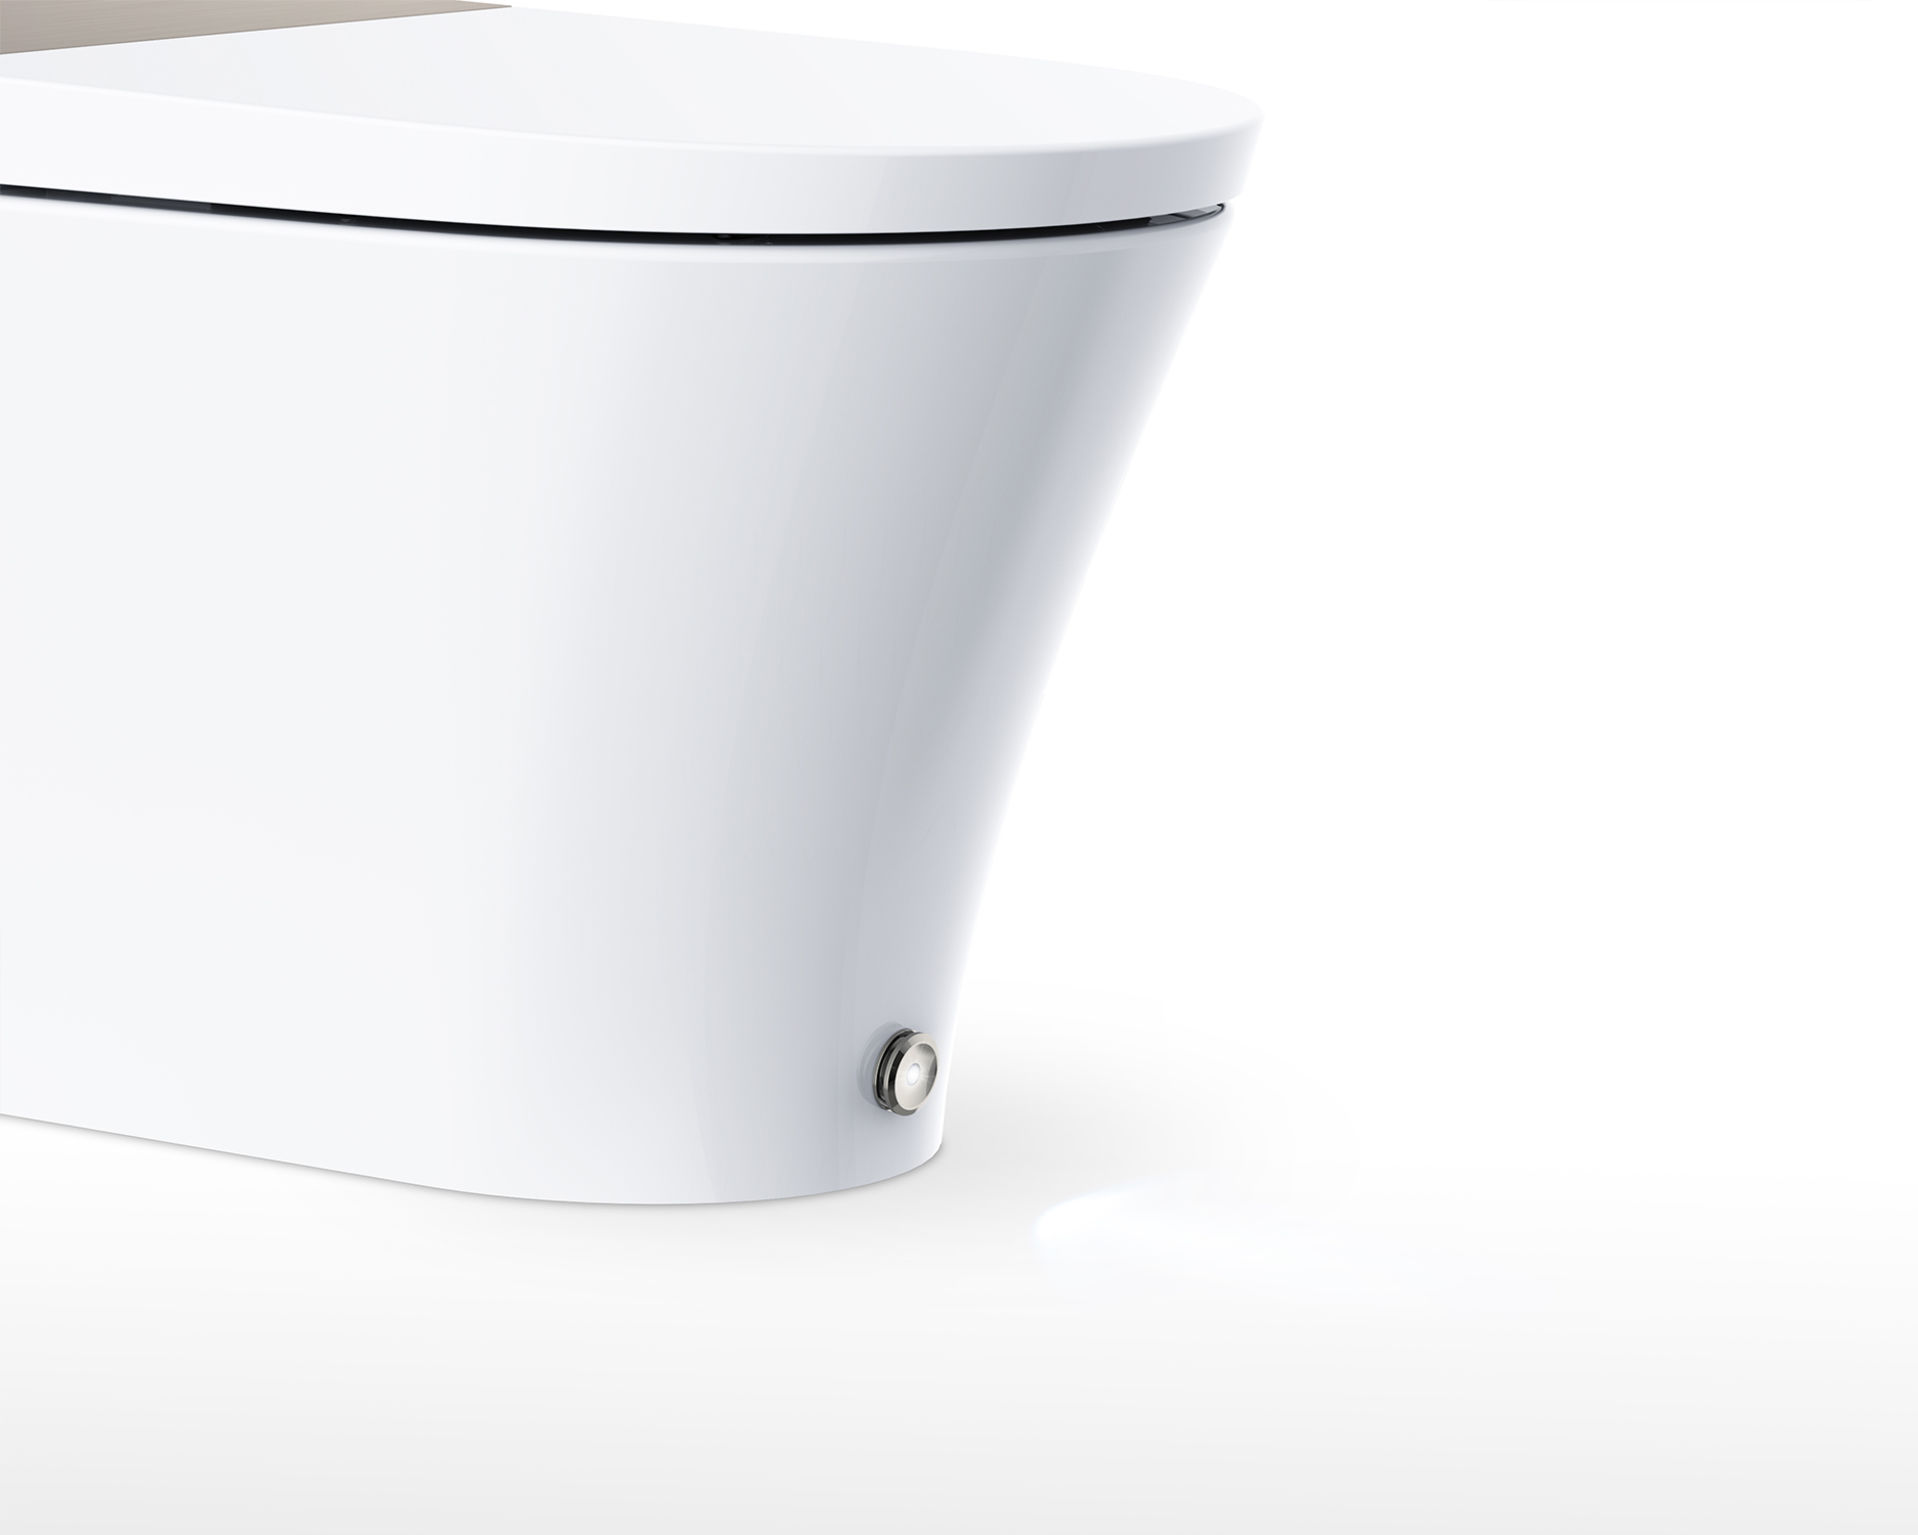 SENSE 9 Smart Toilet